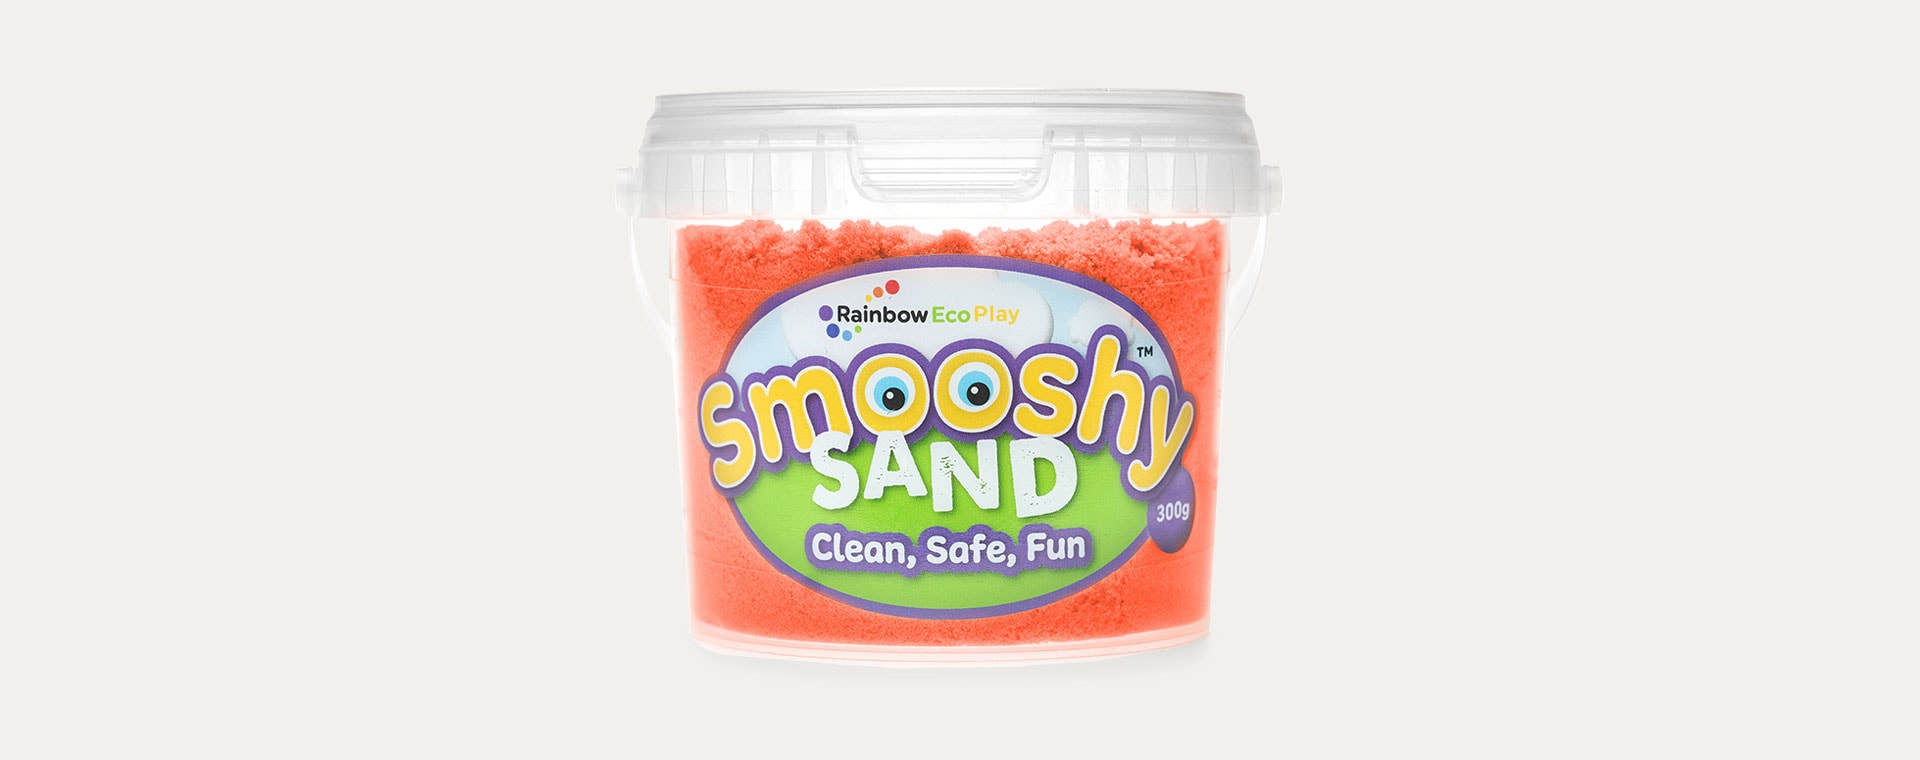 Red Rainbow Eco Play Smooshy Kinetic Magic Sand 300g